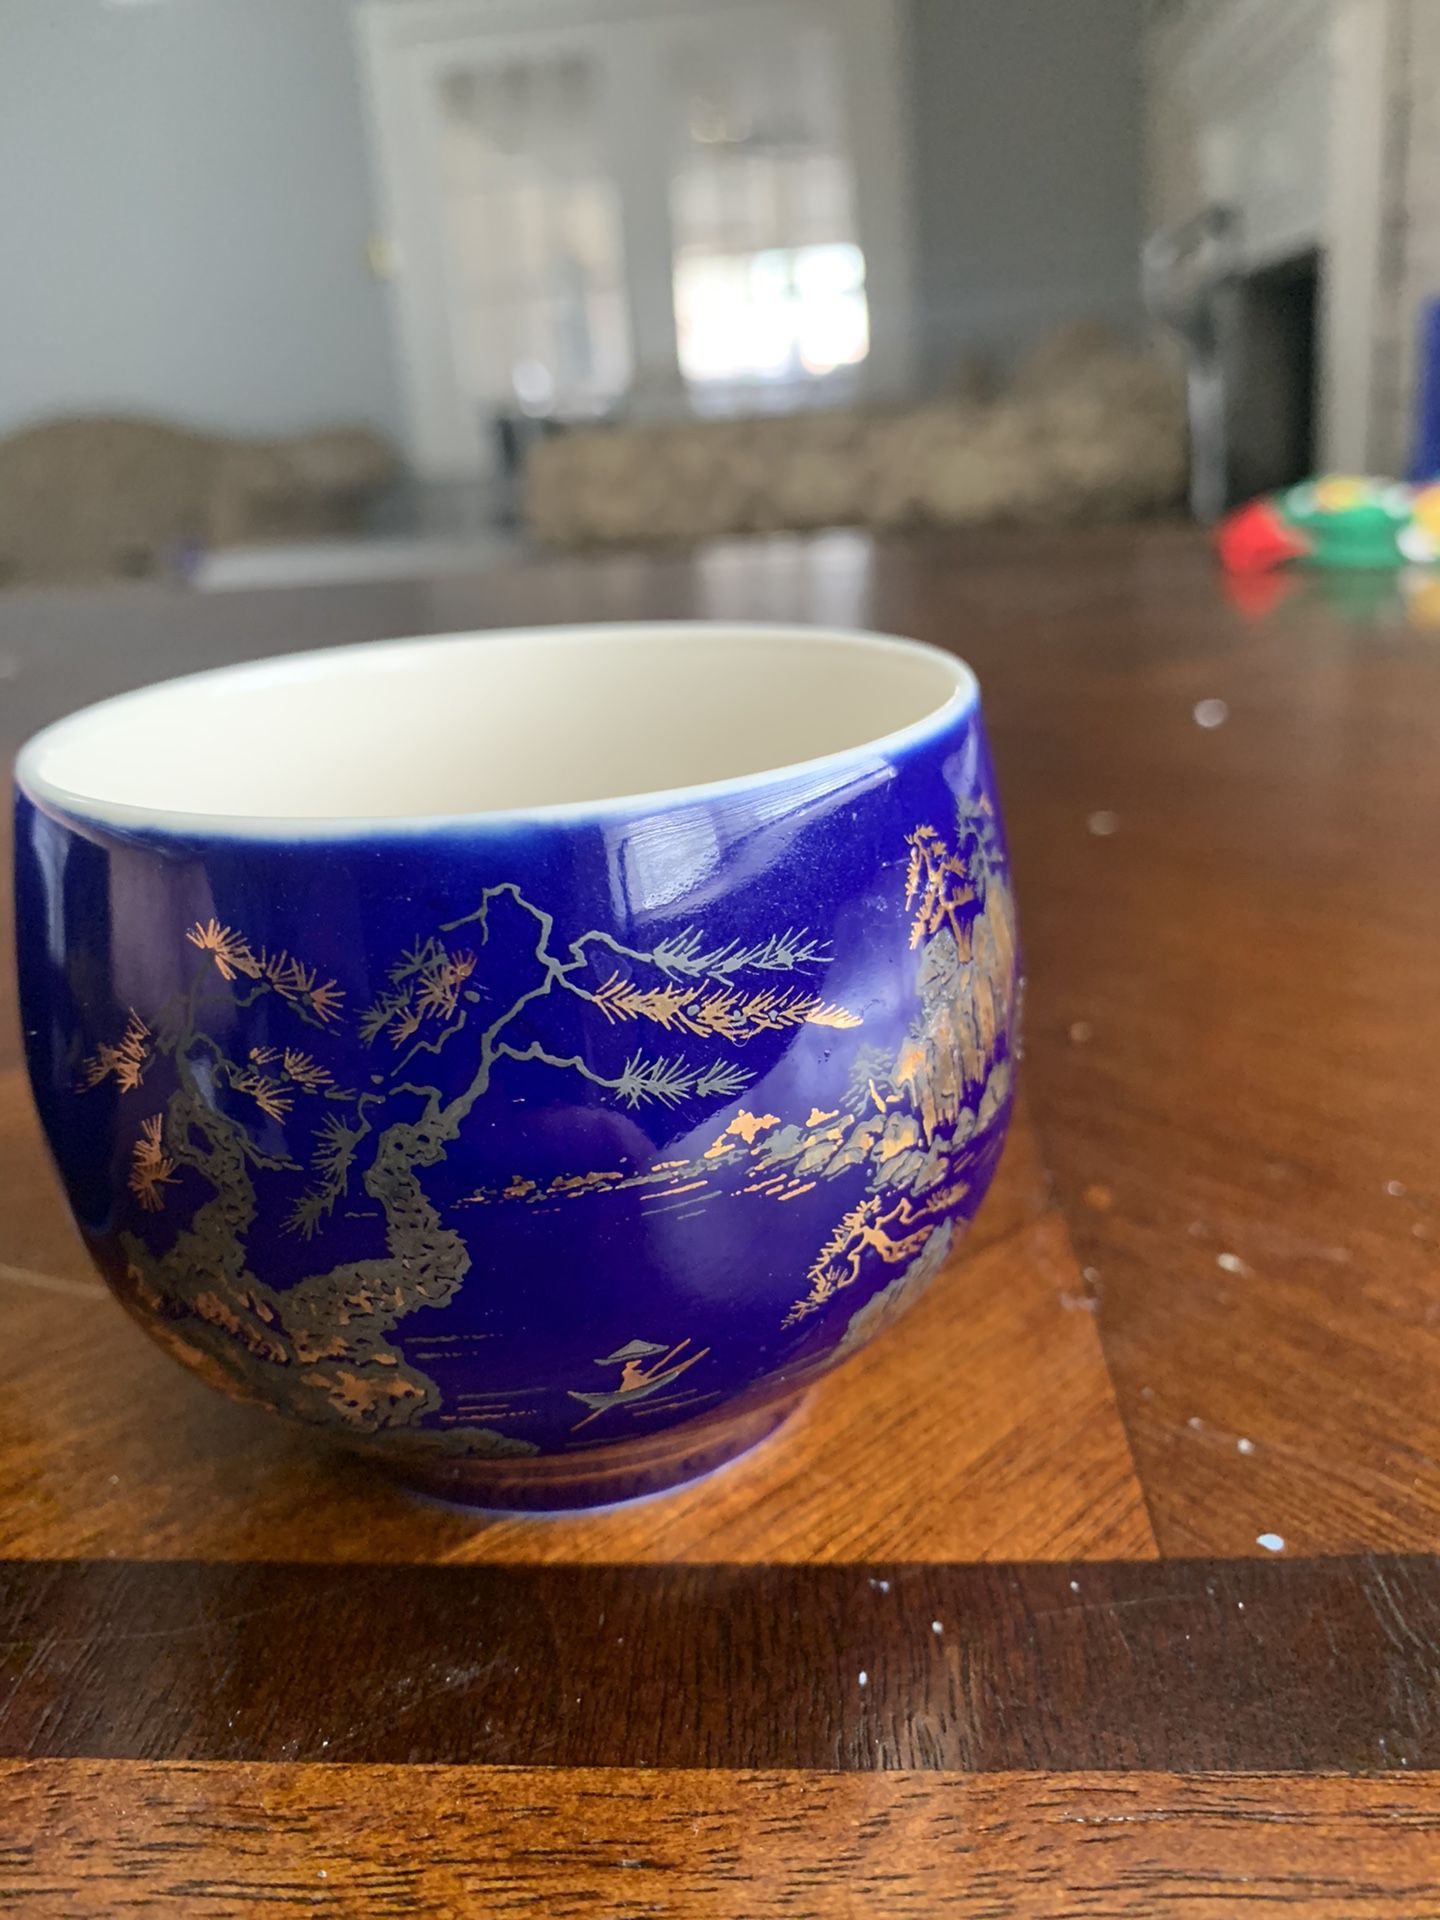 Decorative tea cups from Japan